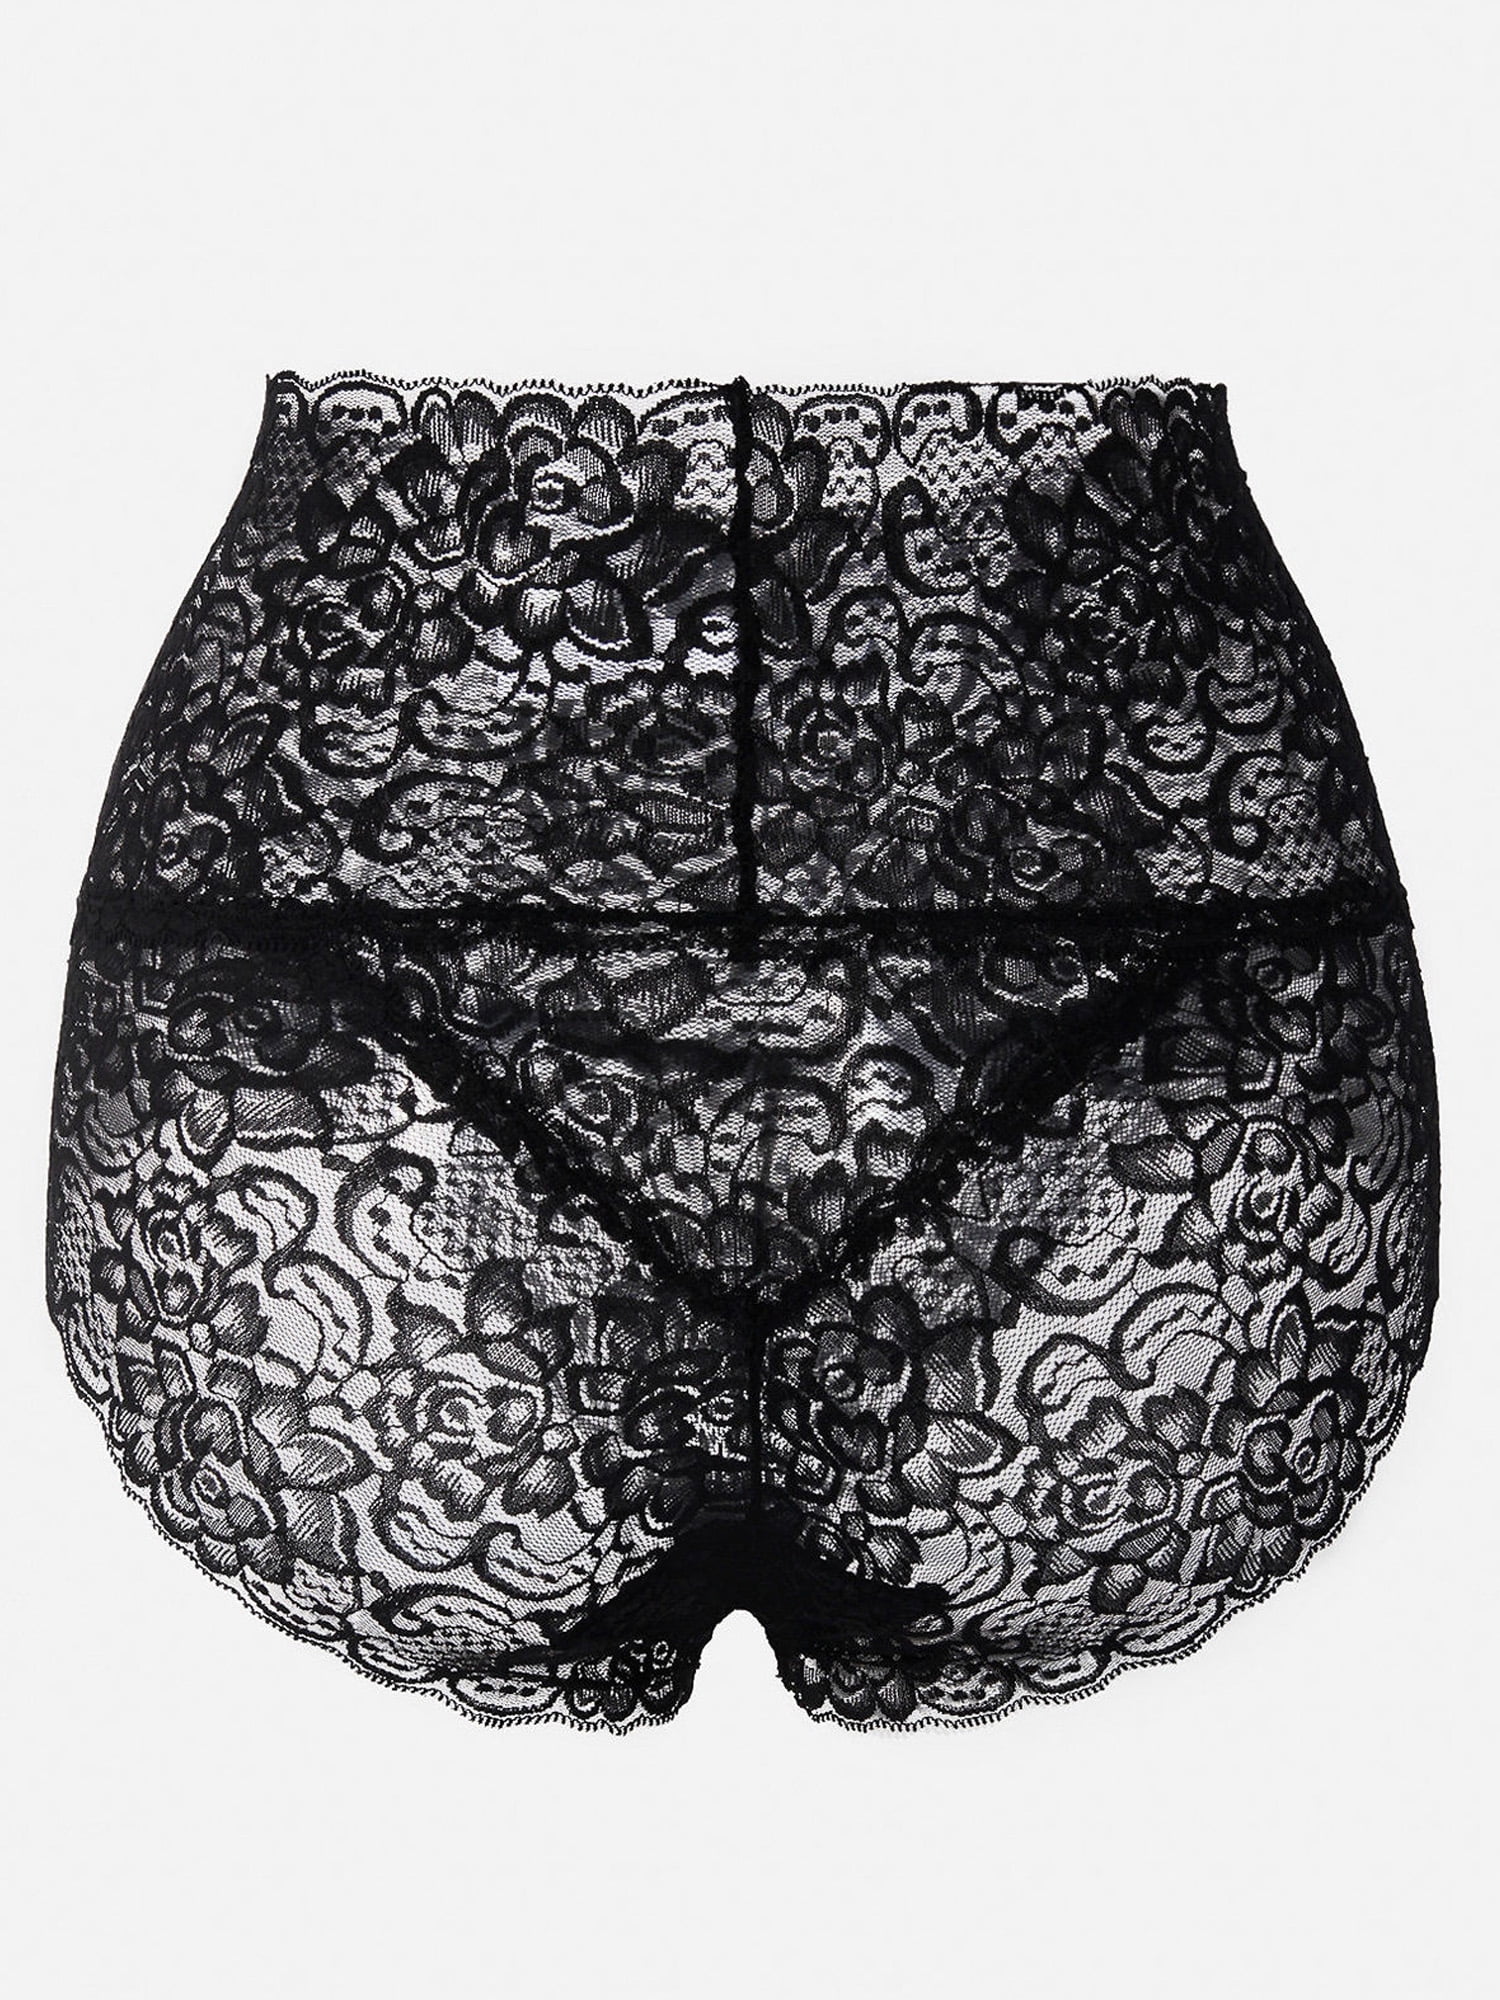 Meihuida Women Sexy High Waist Knickers G String Panties Thongs 